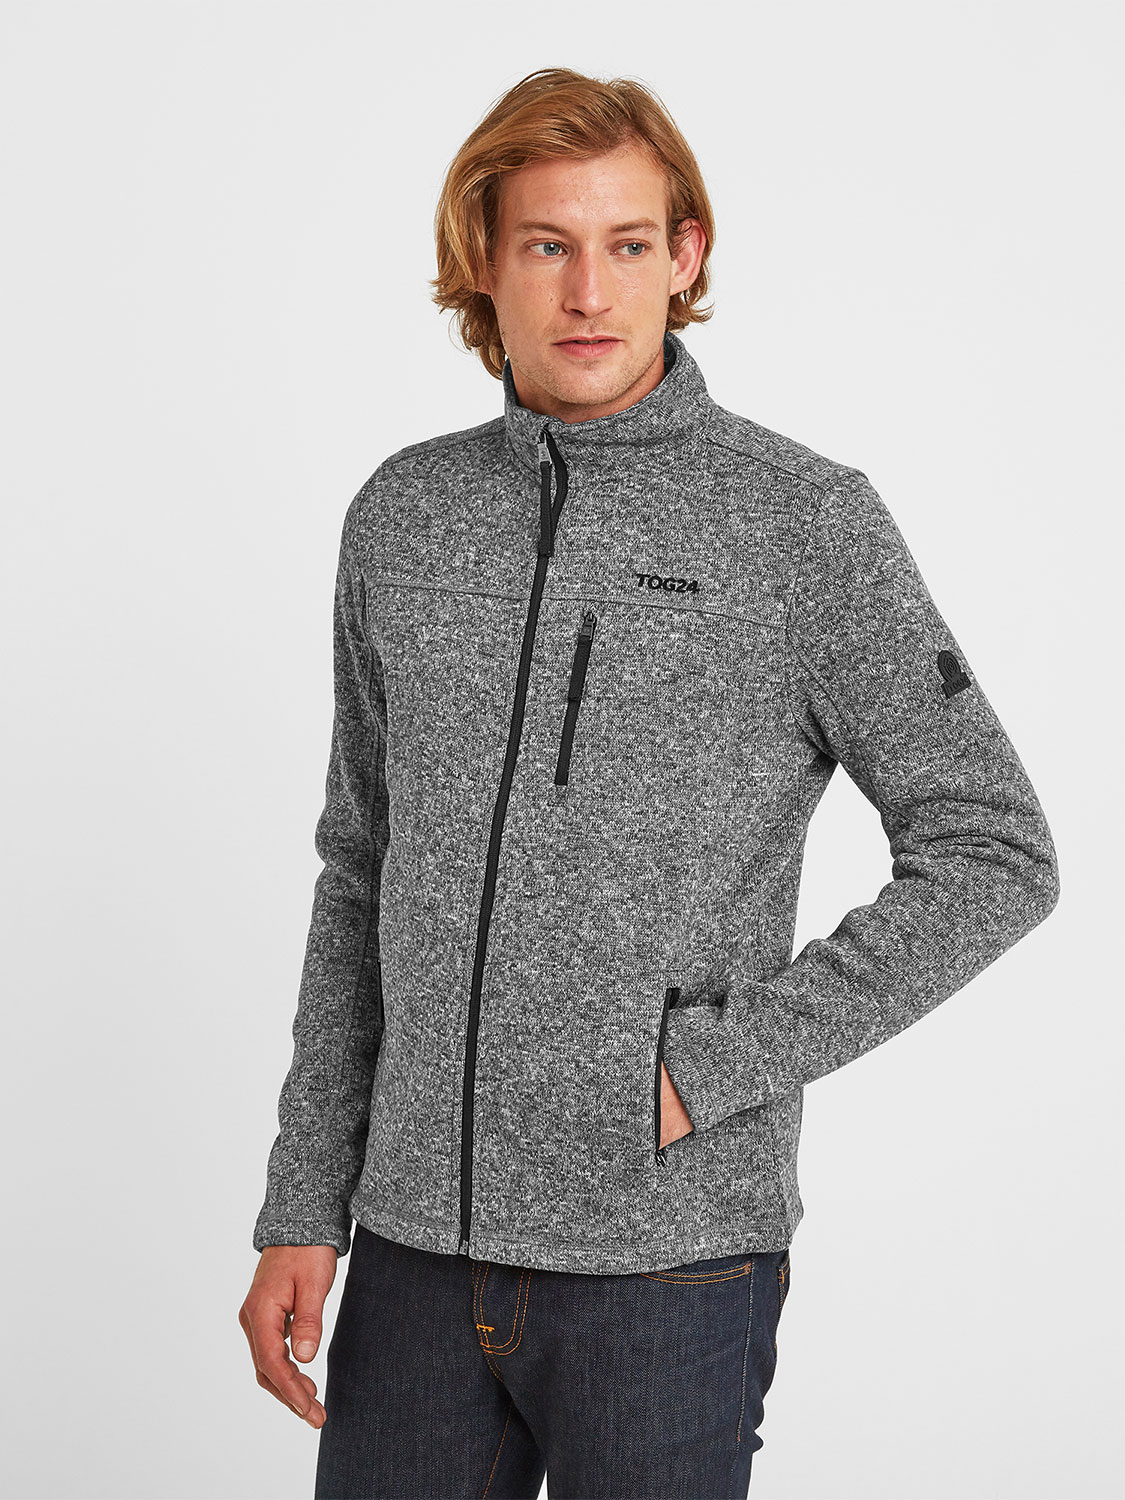 Sedman Knitlook Fleece Jacket - Size: Small Men’s Grey Tog24